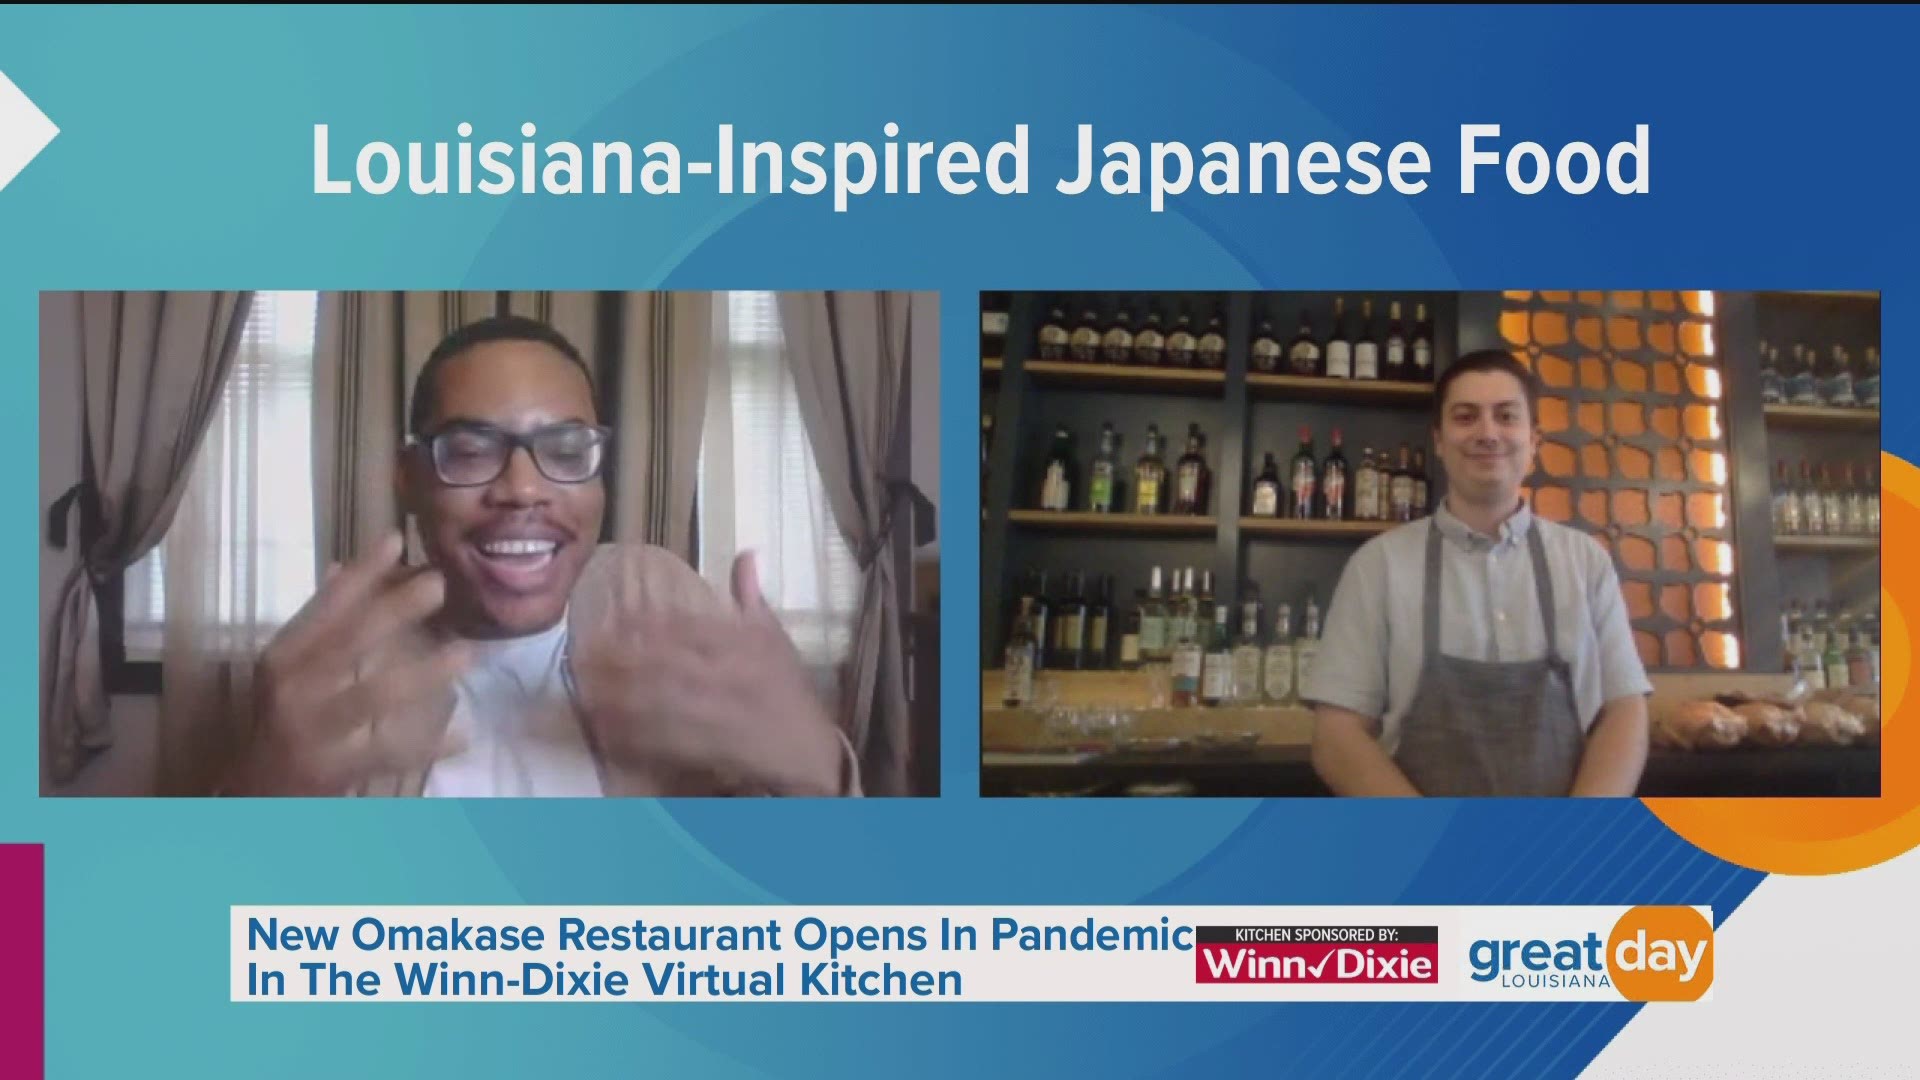 Louisiana-inspired Japanese restaurant, Yo Nashi, cooked a fish dish in the Winn Dixie Virtual Kitchen.